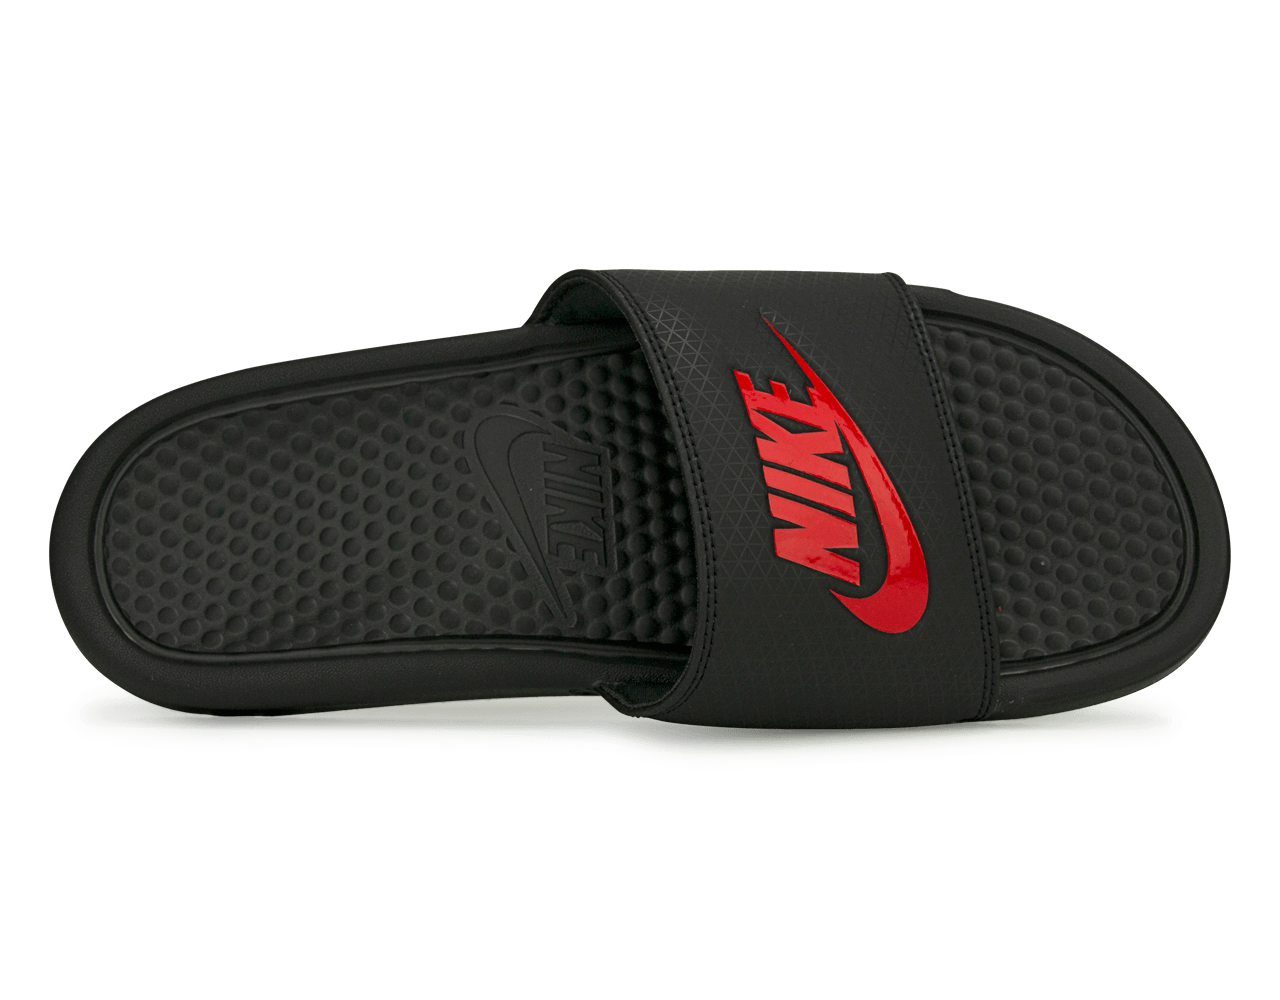 Nike Men's Benassi JDI Sandal Black/Challenge Red Soleplate